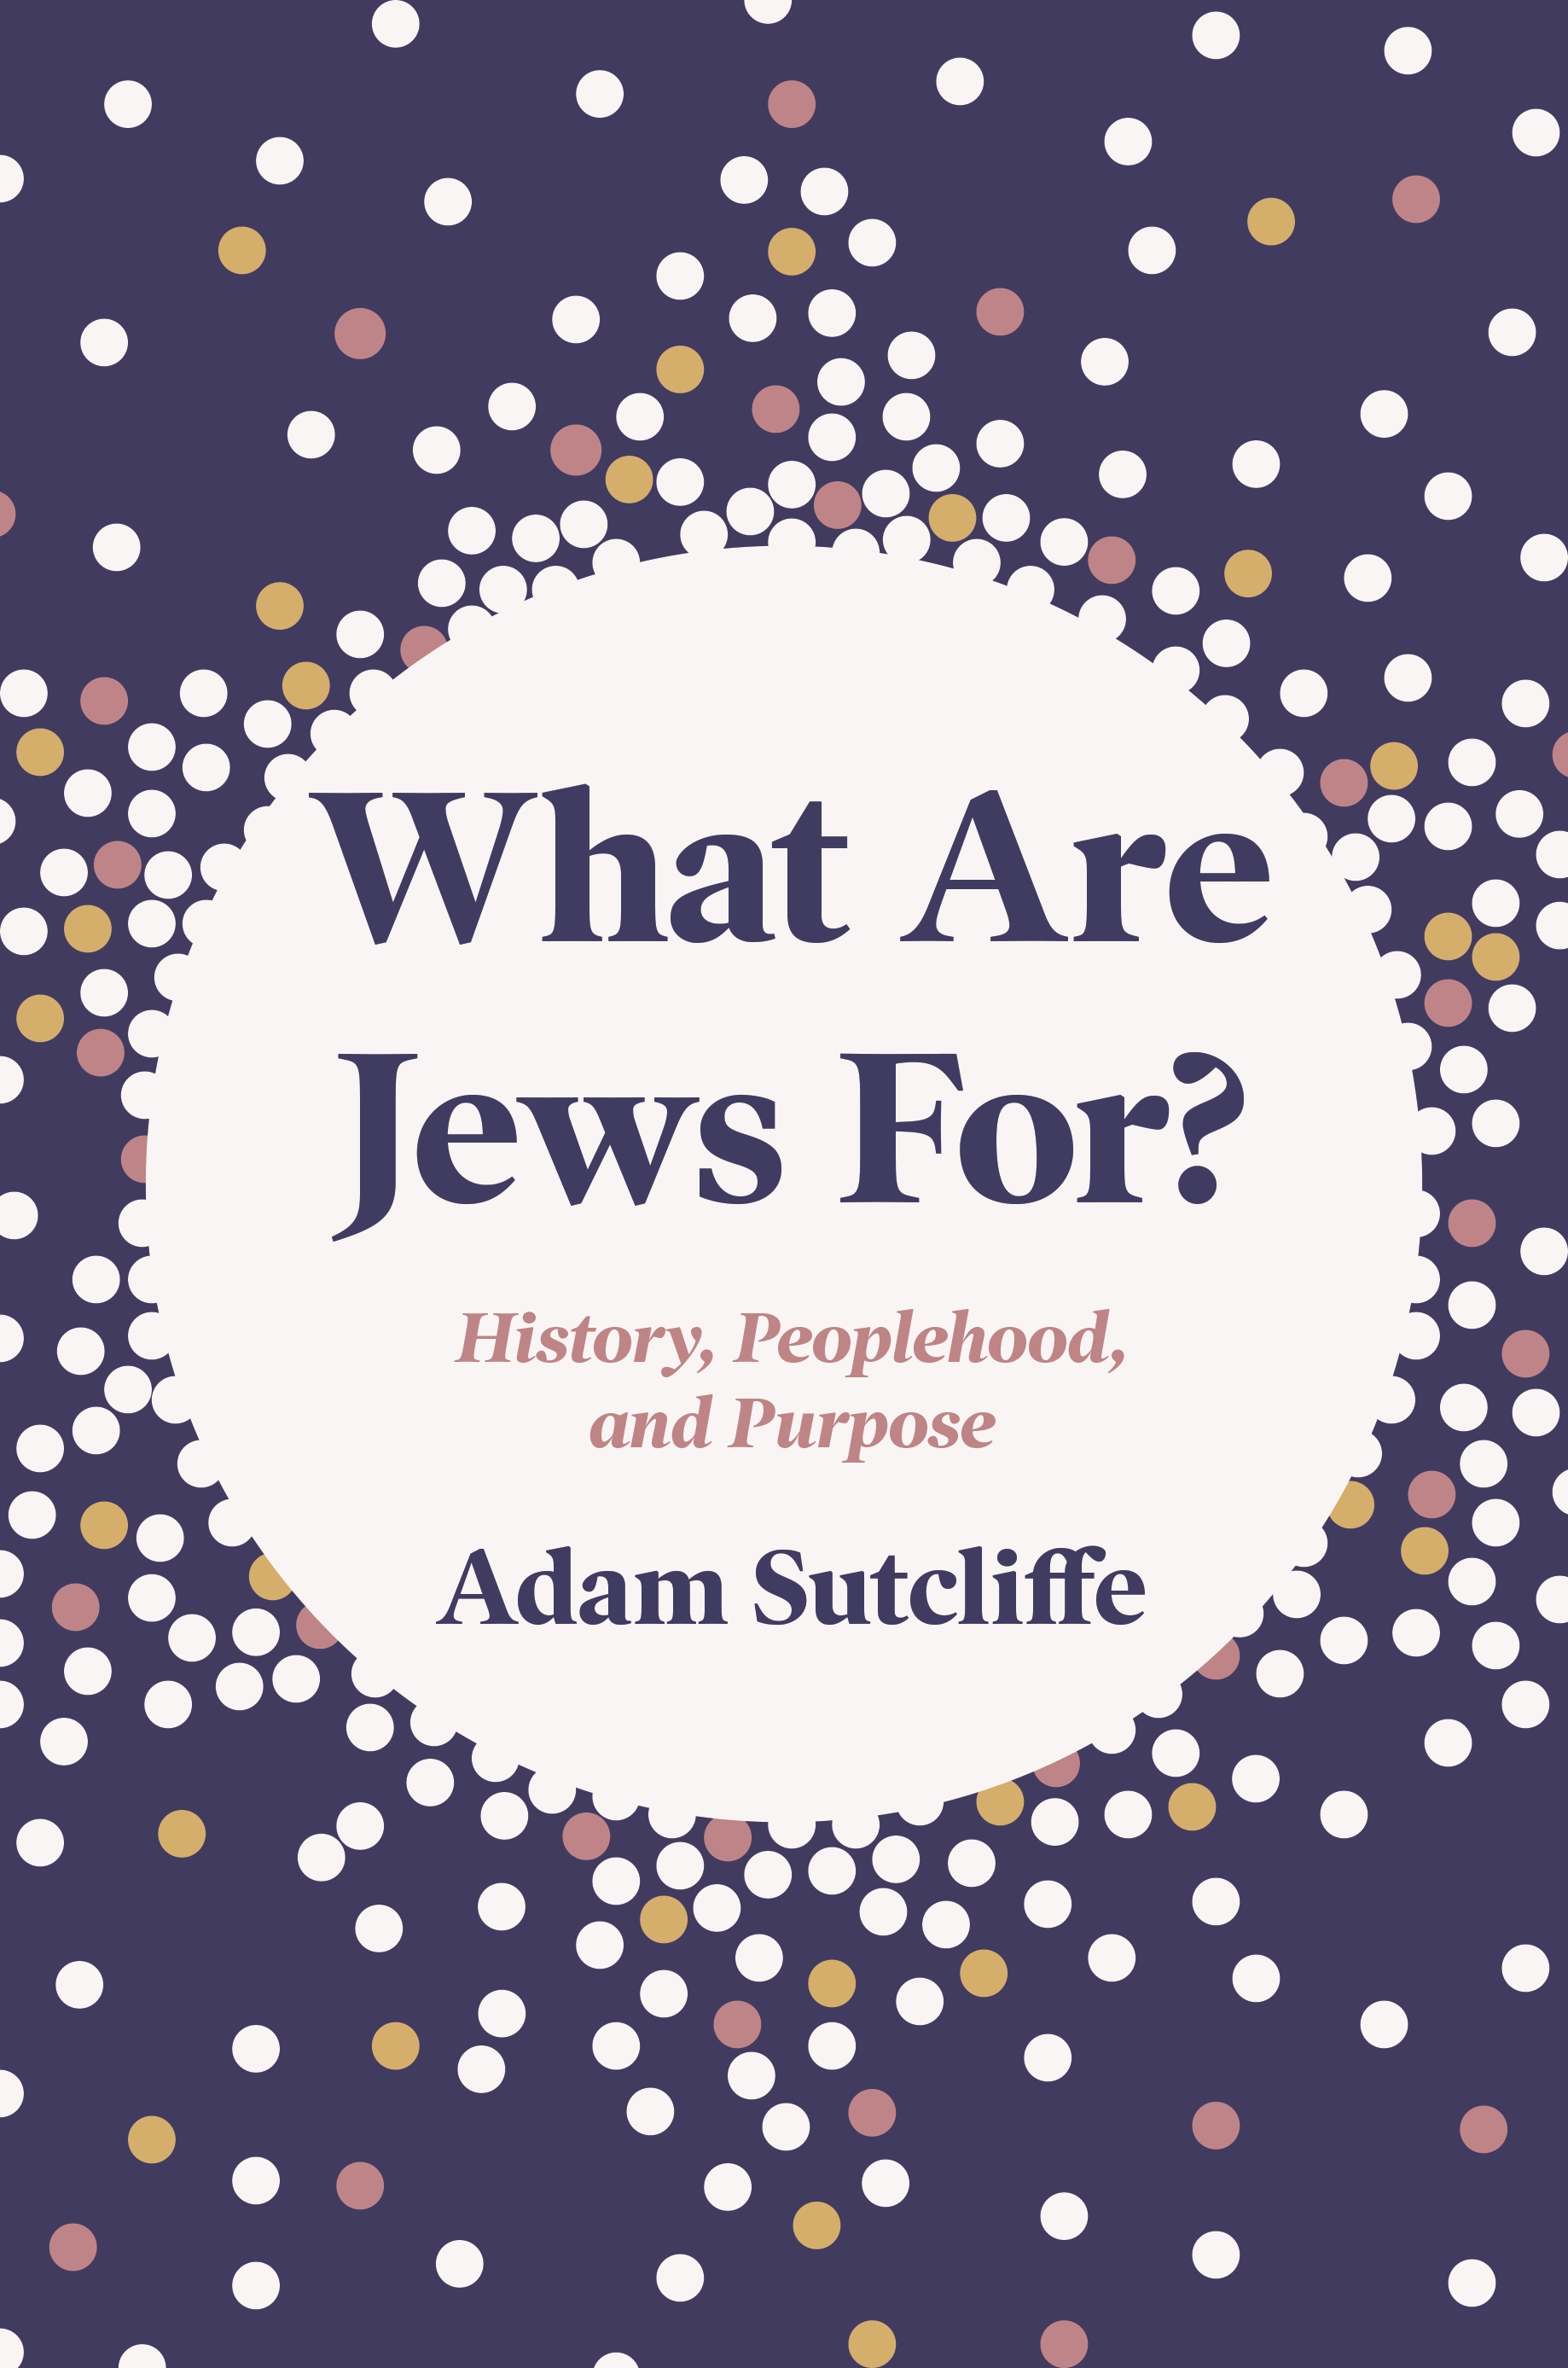 What Are Jews For? Princeton University Press